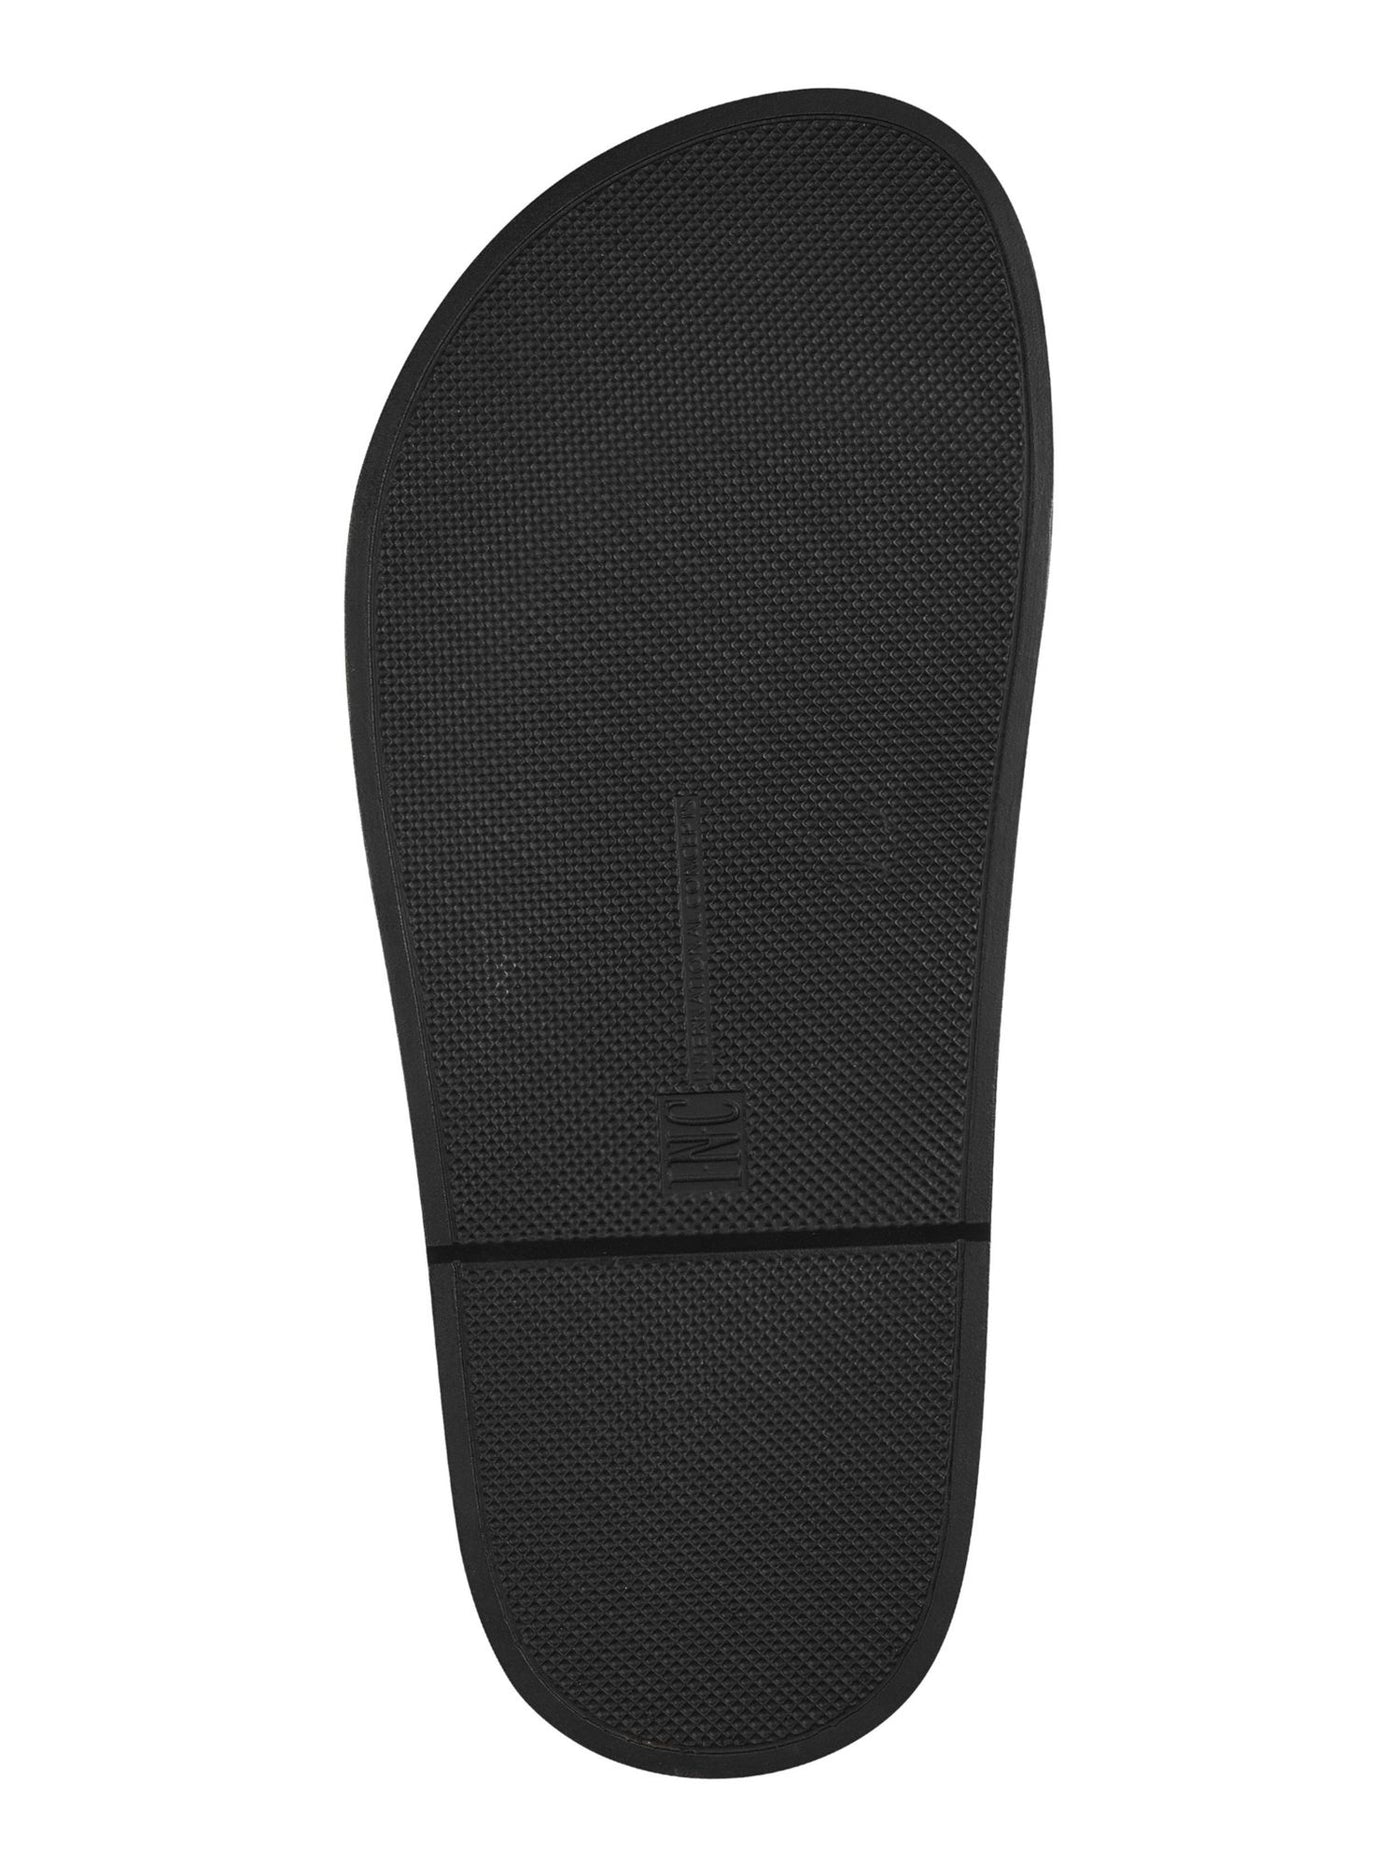 INC Womens Black Slip-Resistant Adjustable Quilted Liyana Round Toe Buckle Slingback Sandal 6 M